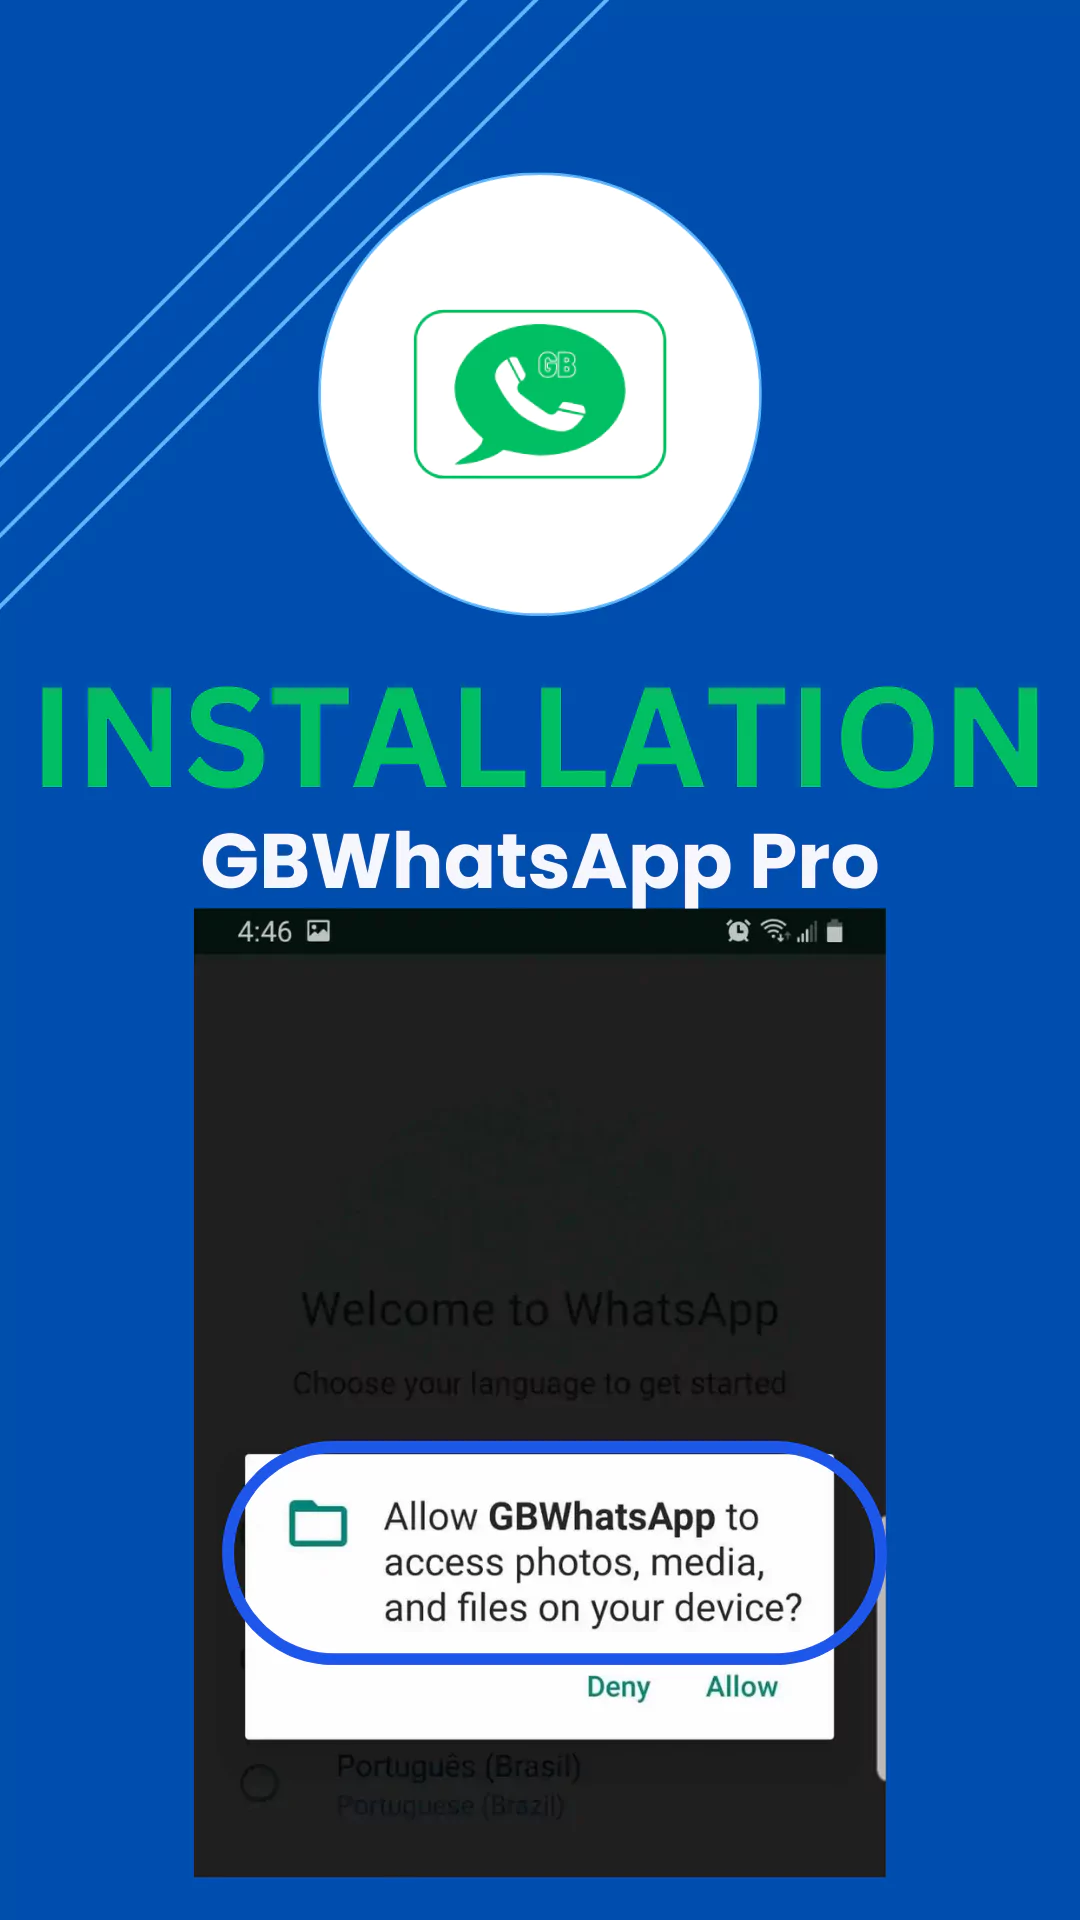 gb-whatsapp-pro-allow-unknown-apps